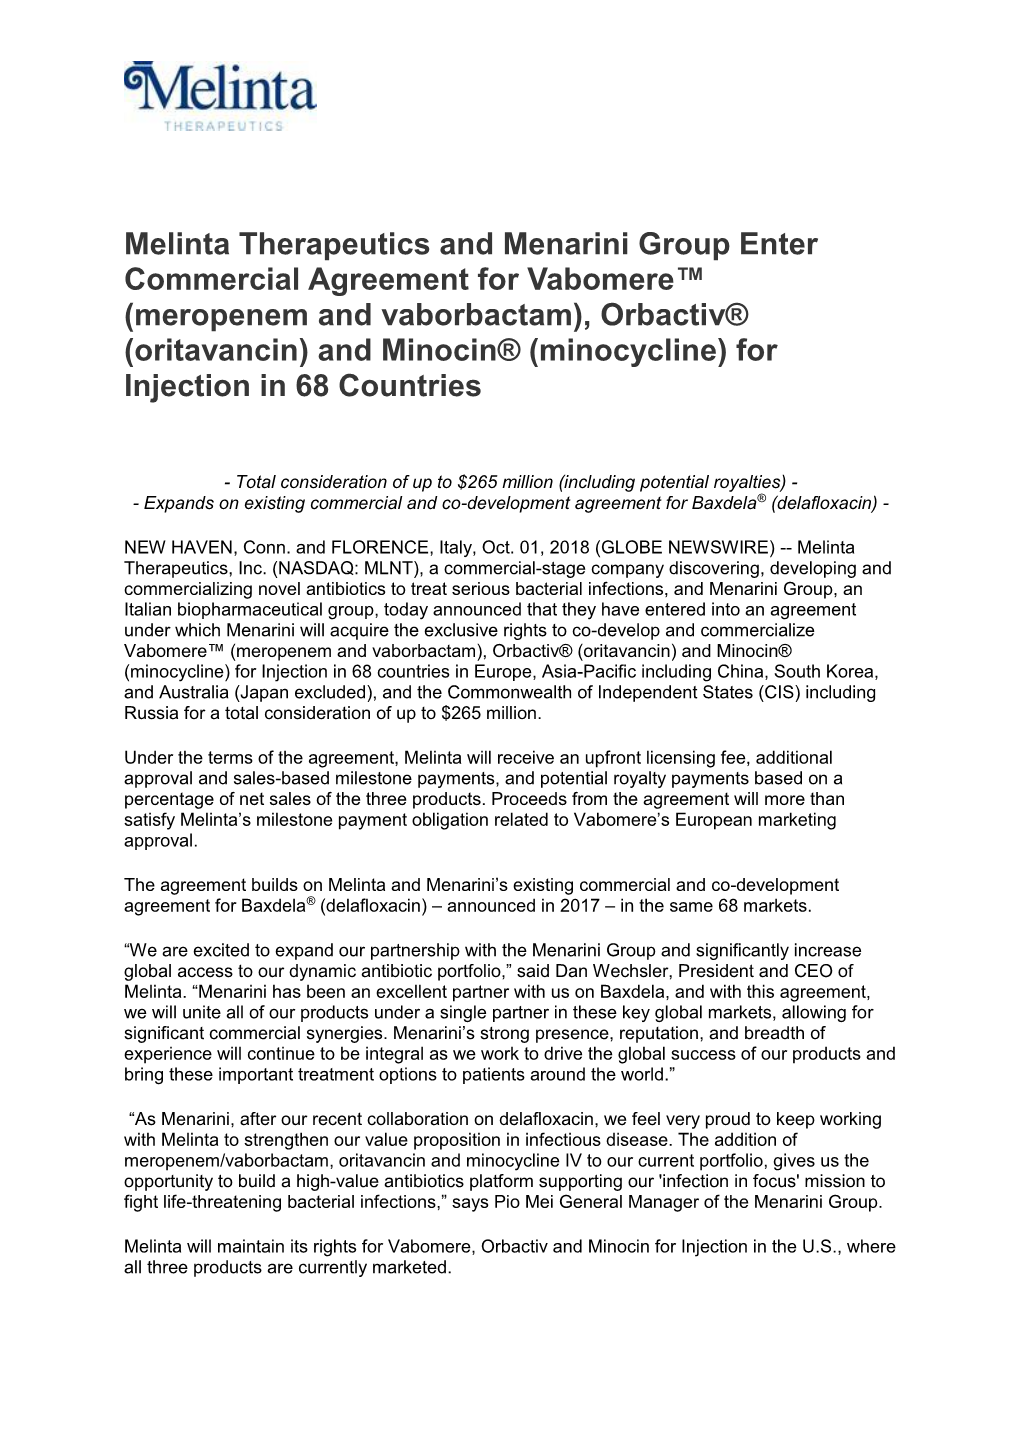 Melinta Therapeutics and Menarini Group Enter Commercial Agreement for Vabomere™ (Meropenem and Vaborbactam), Orbactiv® (Orit